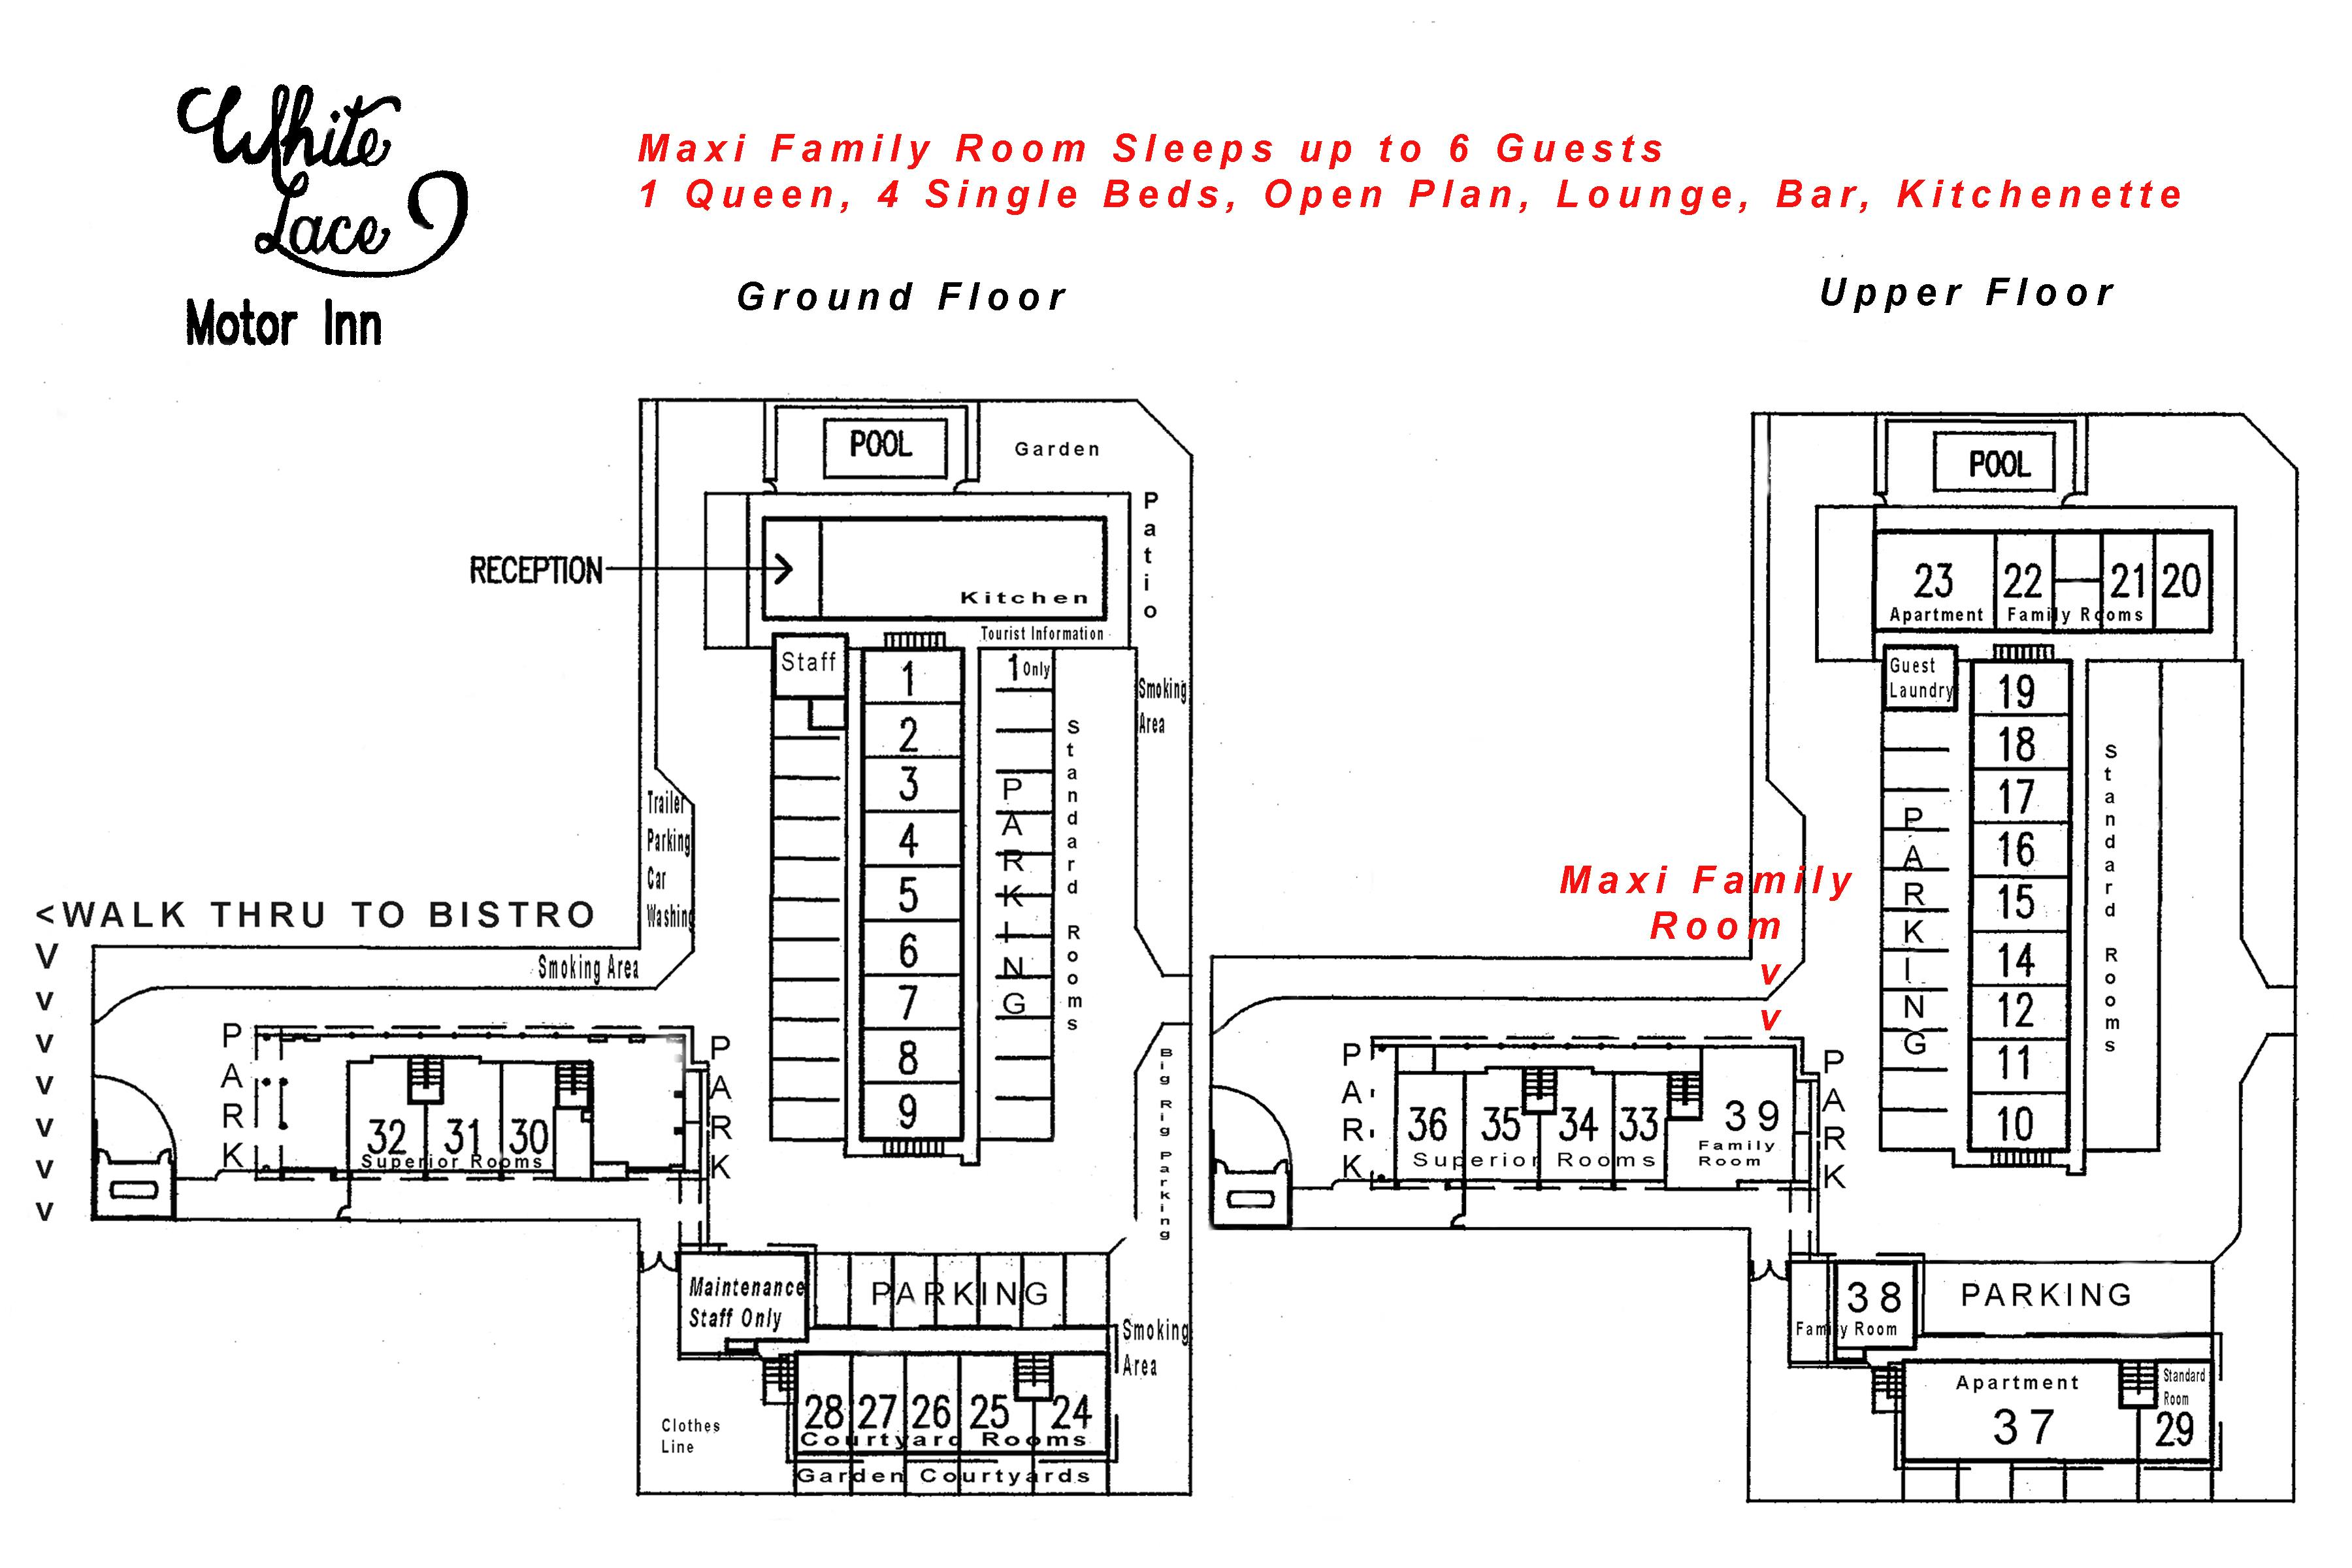 Maxi Family Room site plan White Lace Motor Inn Mackay, budget accommodation mackay